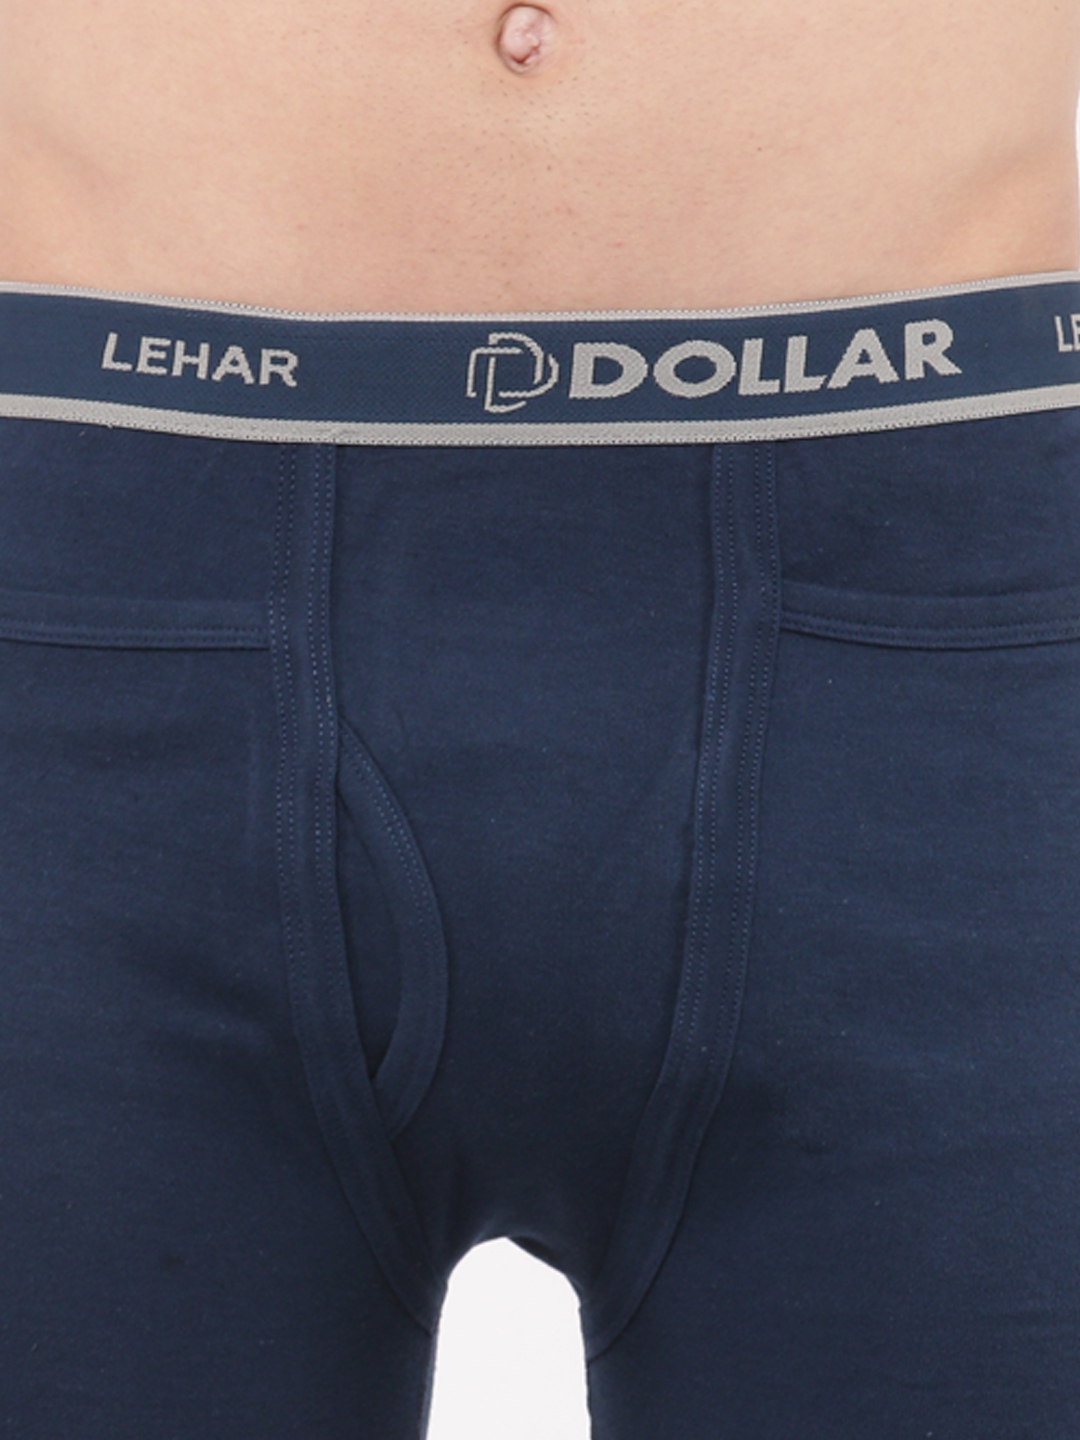 Dollar Lehar Mens Pack of 3 Interlock Pocket Trunk – Dollarshoppe